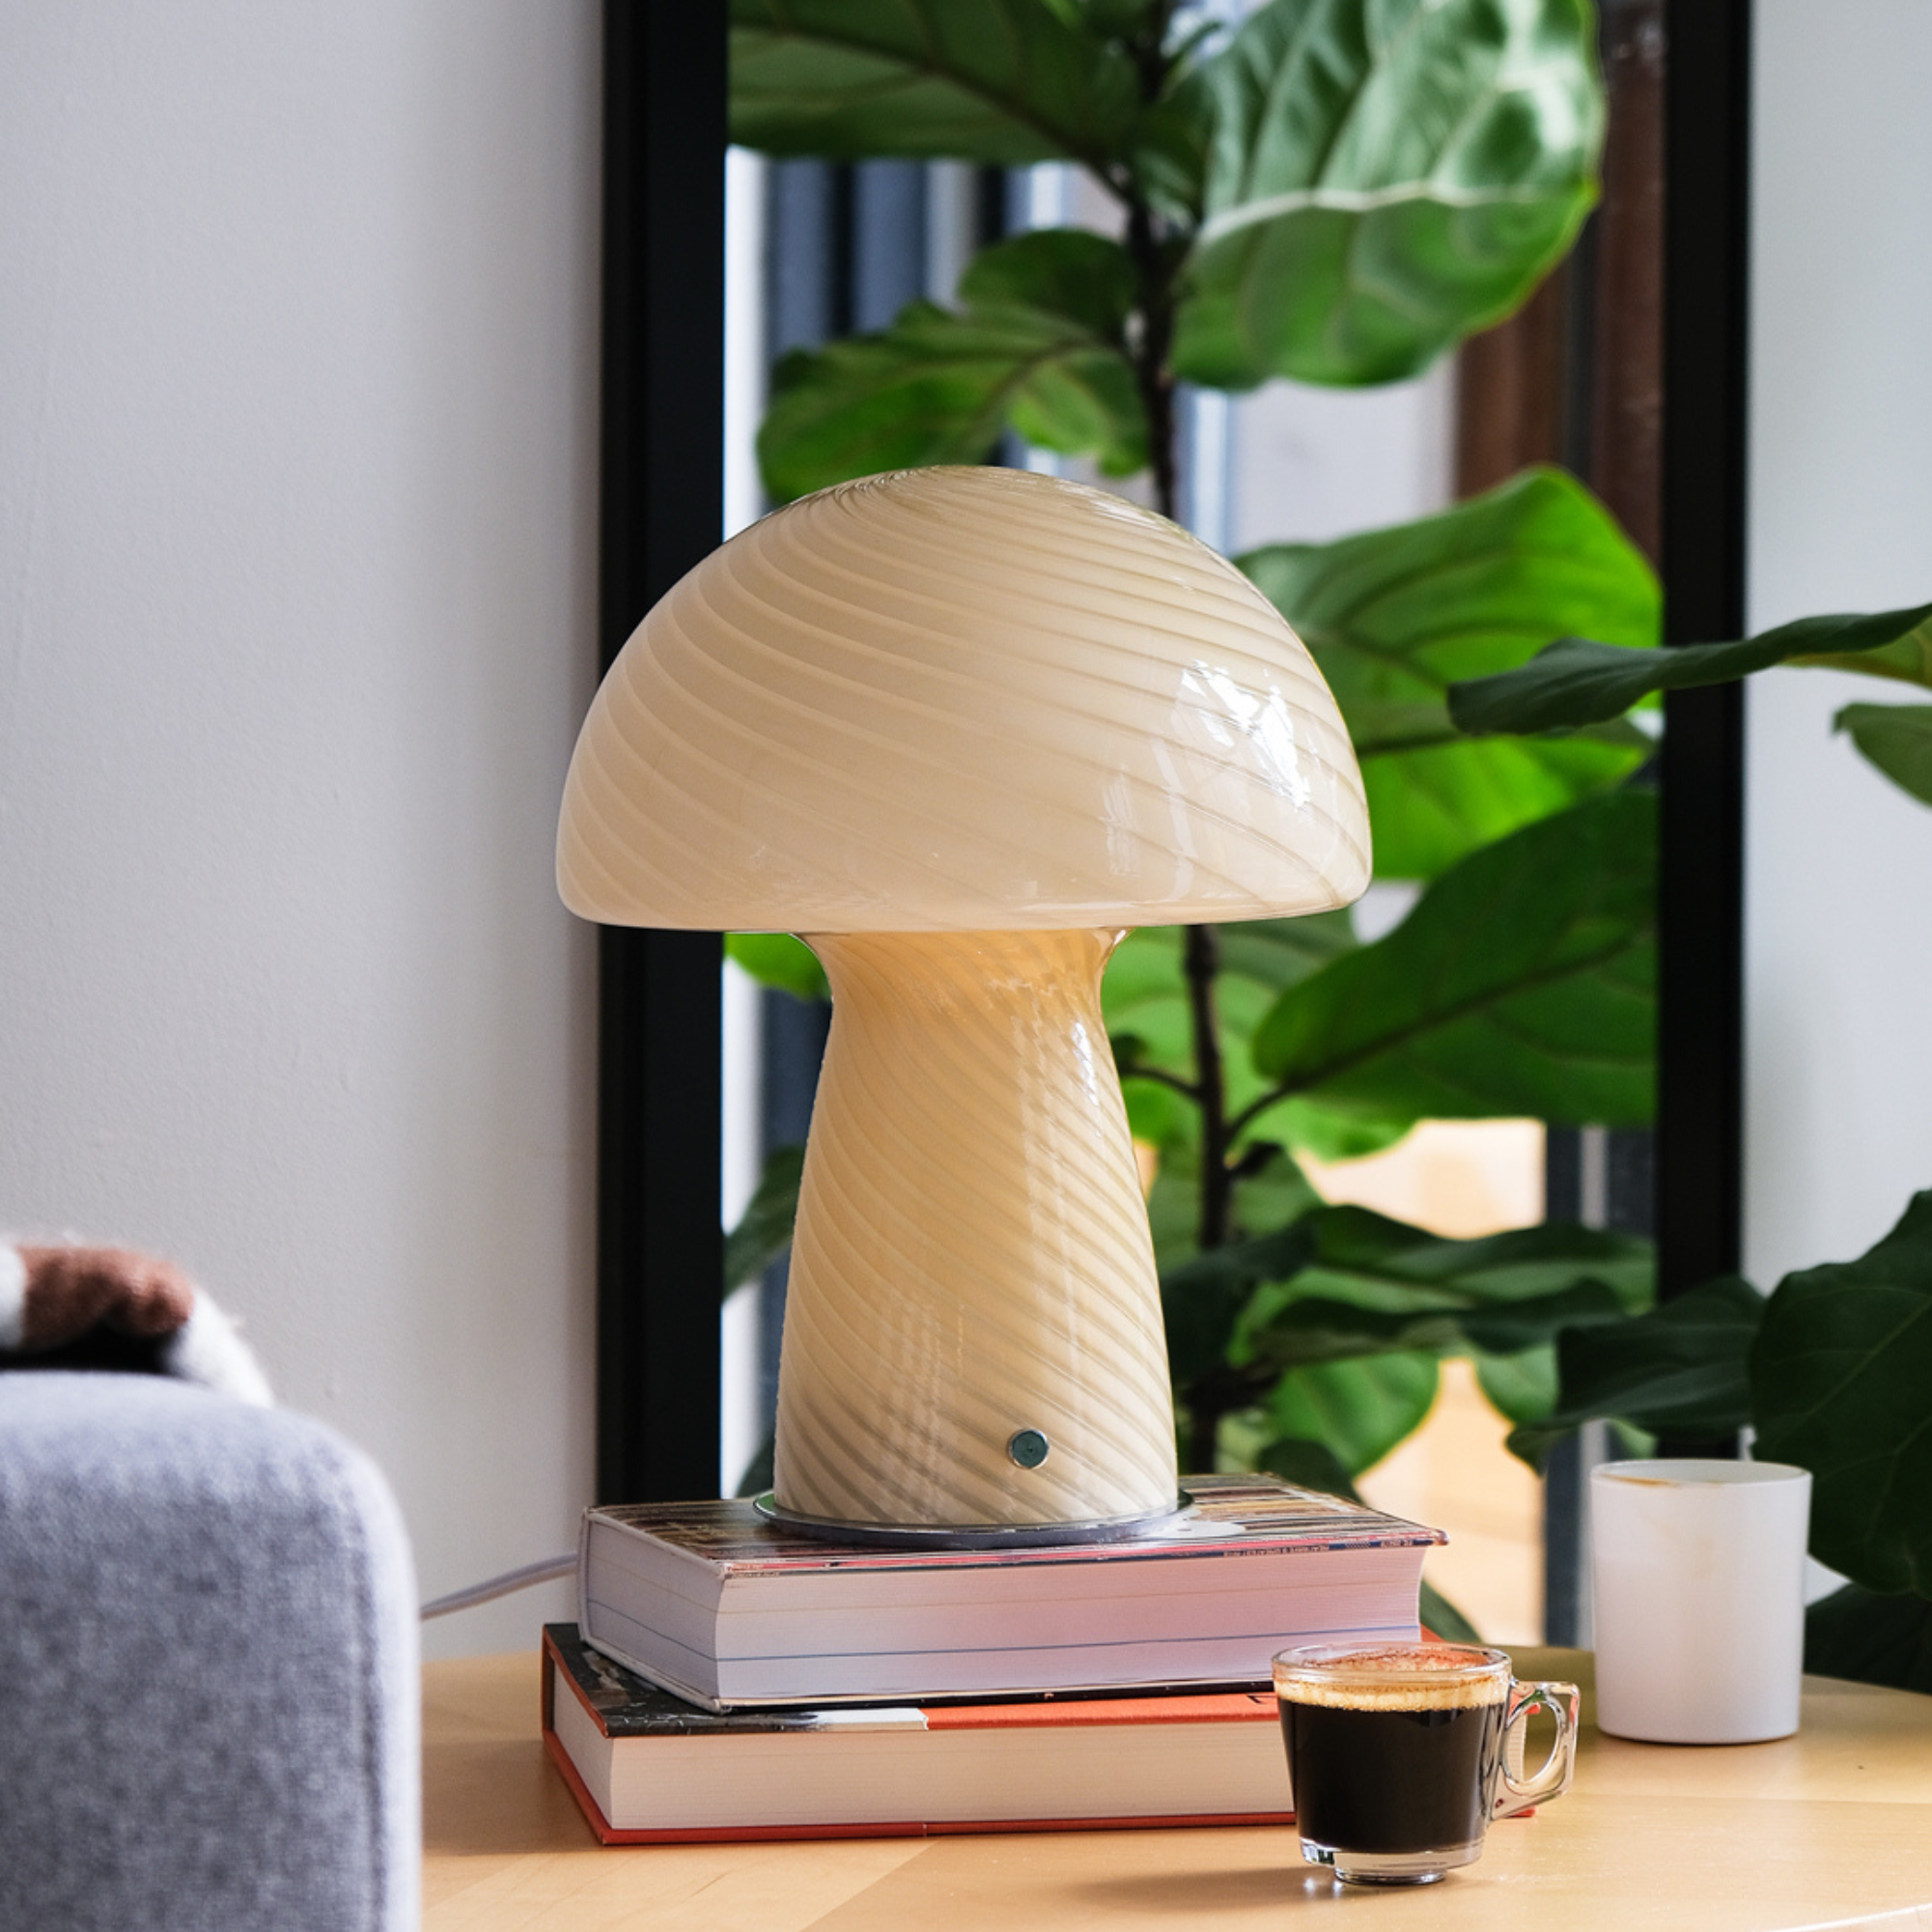 Glass Mushroom Table Lamp, Green